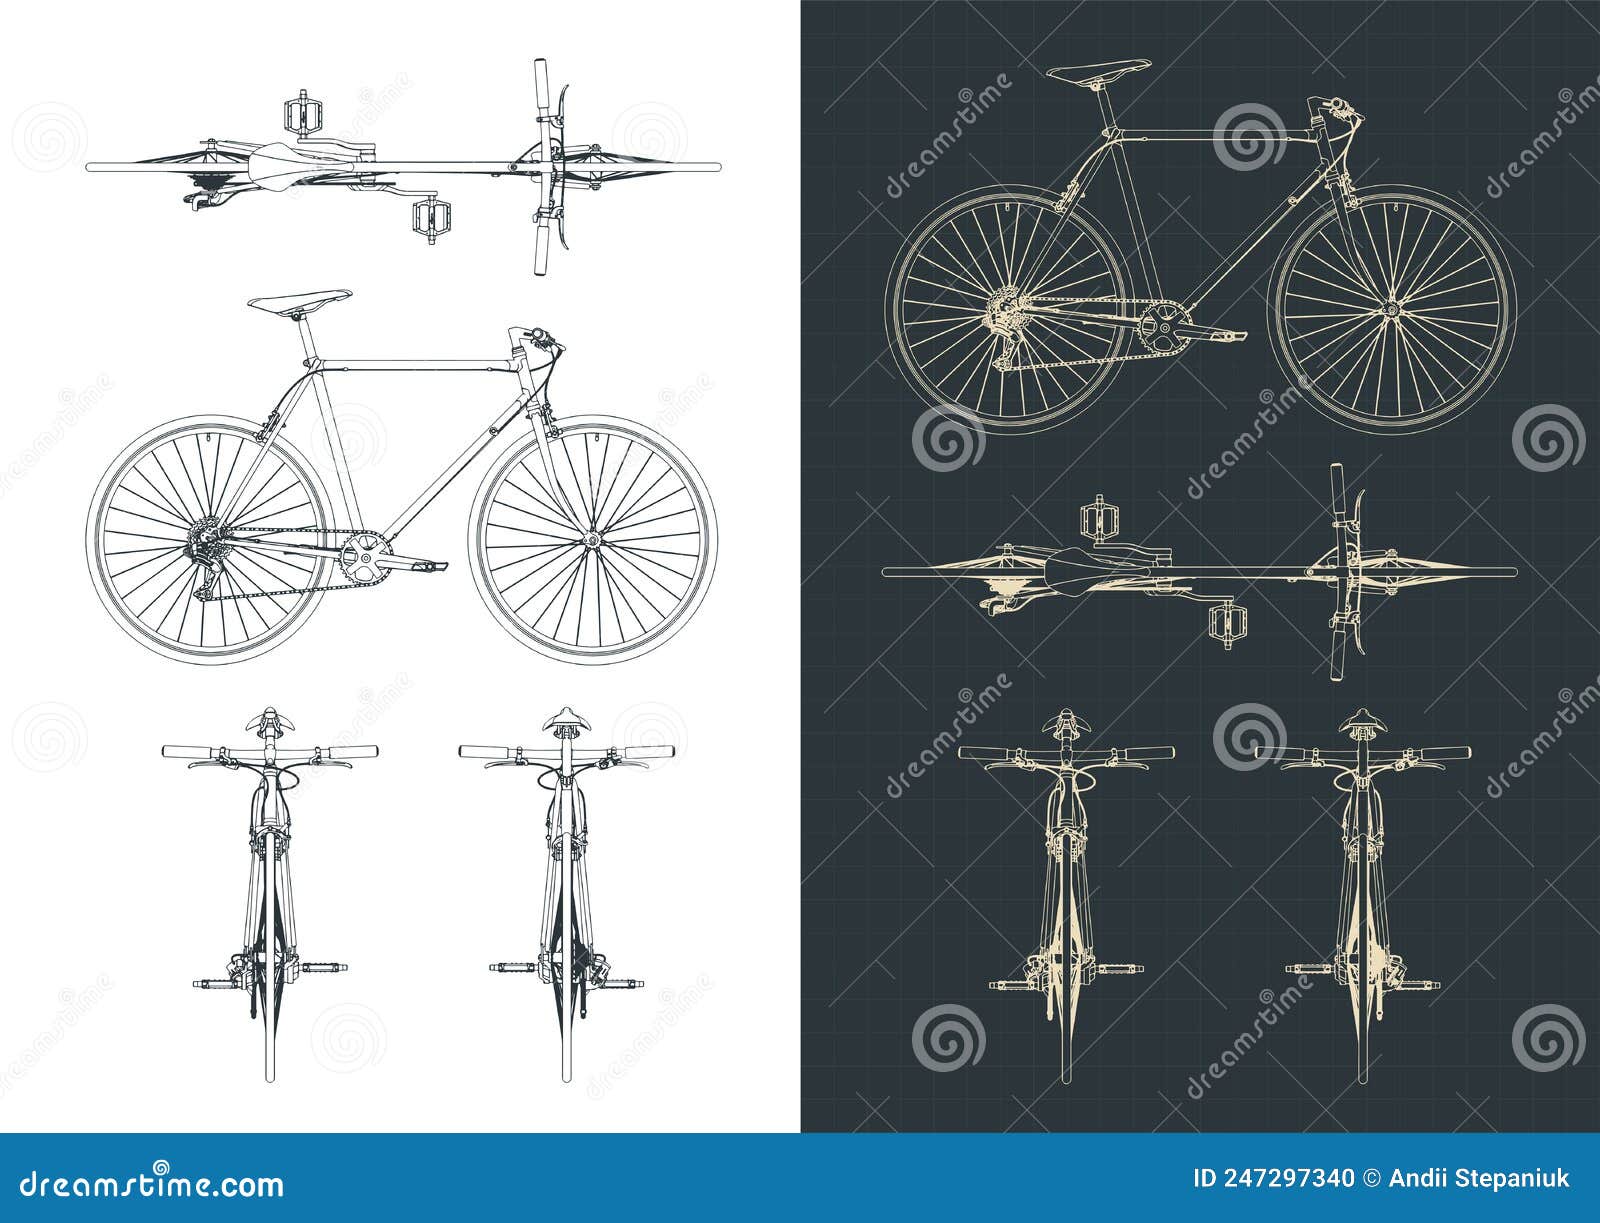 RU2137656C1 - Велосипед - Google Patents